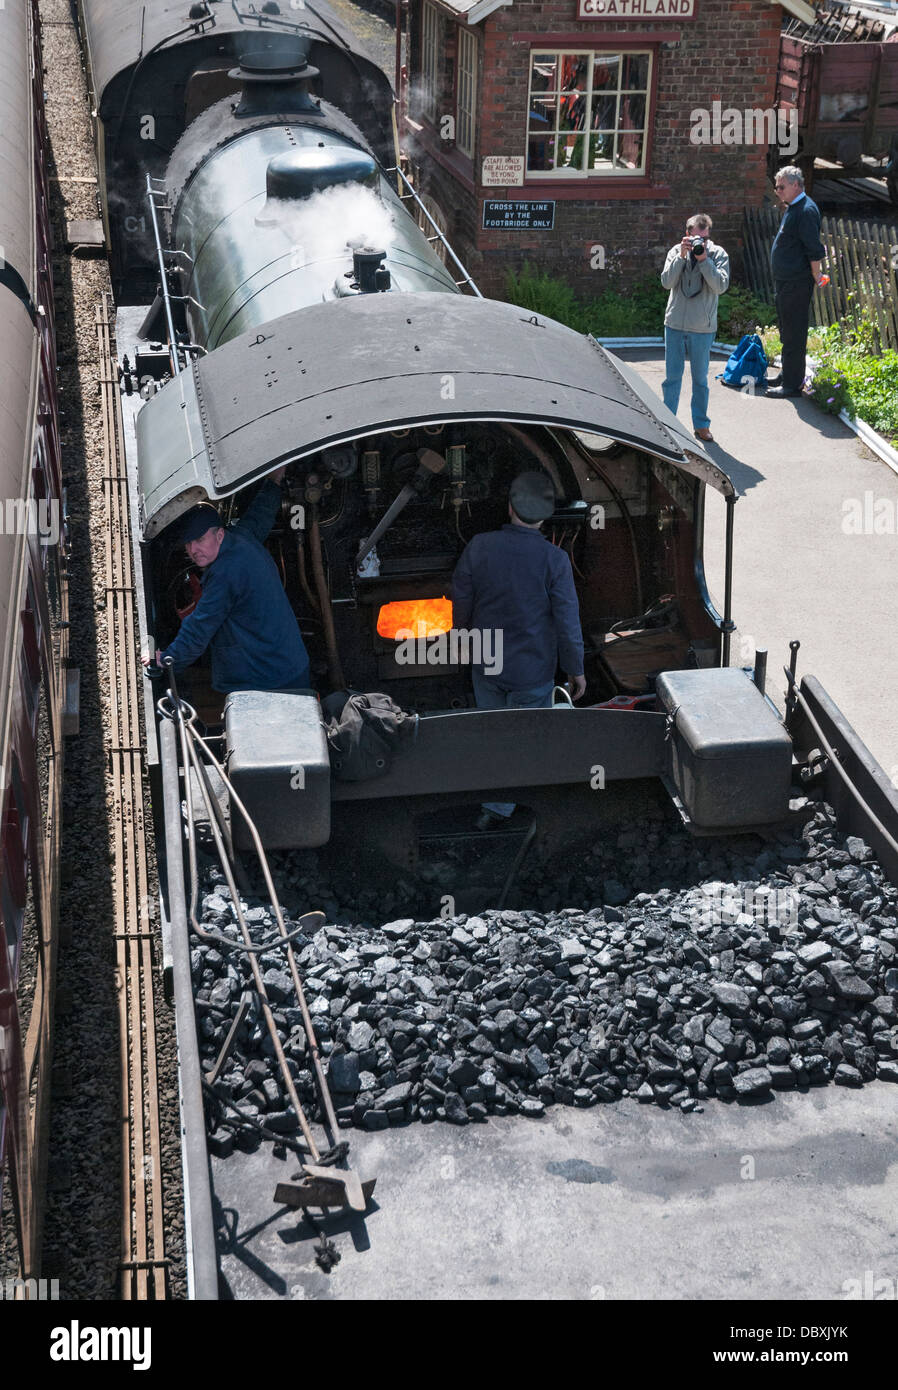 Great Britain, England, Goathland, North Yorkshire Moors Railway, train railroad station steam engine locomotive firebox coal Stock Photo